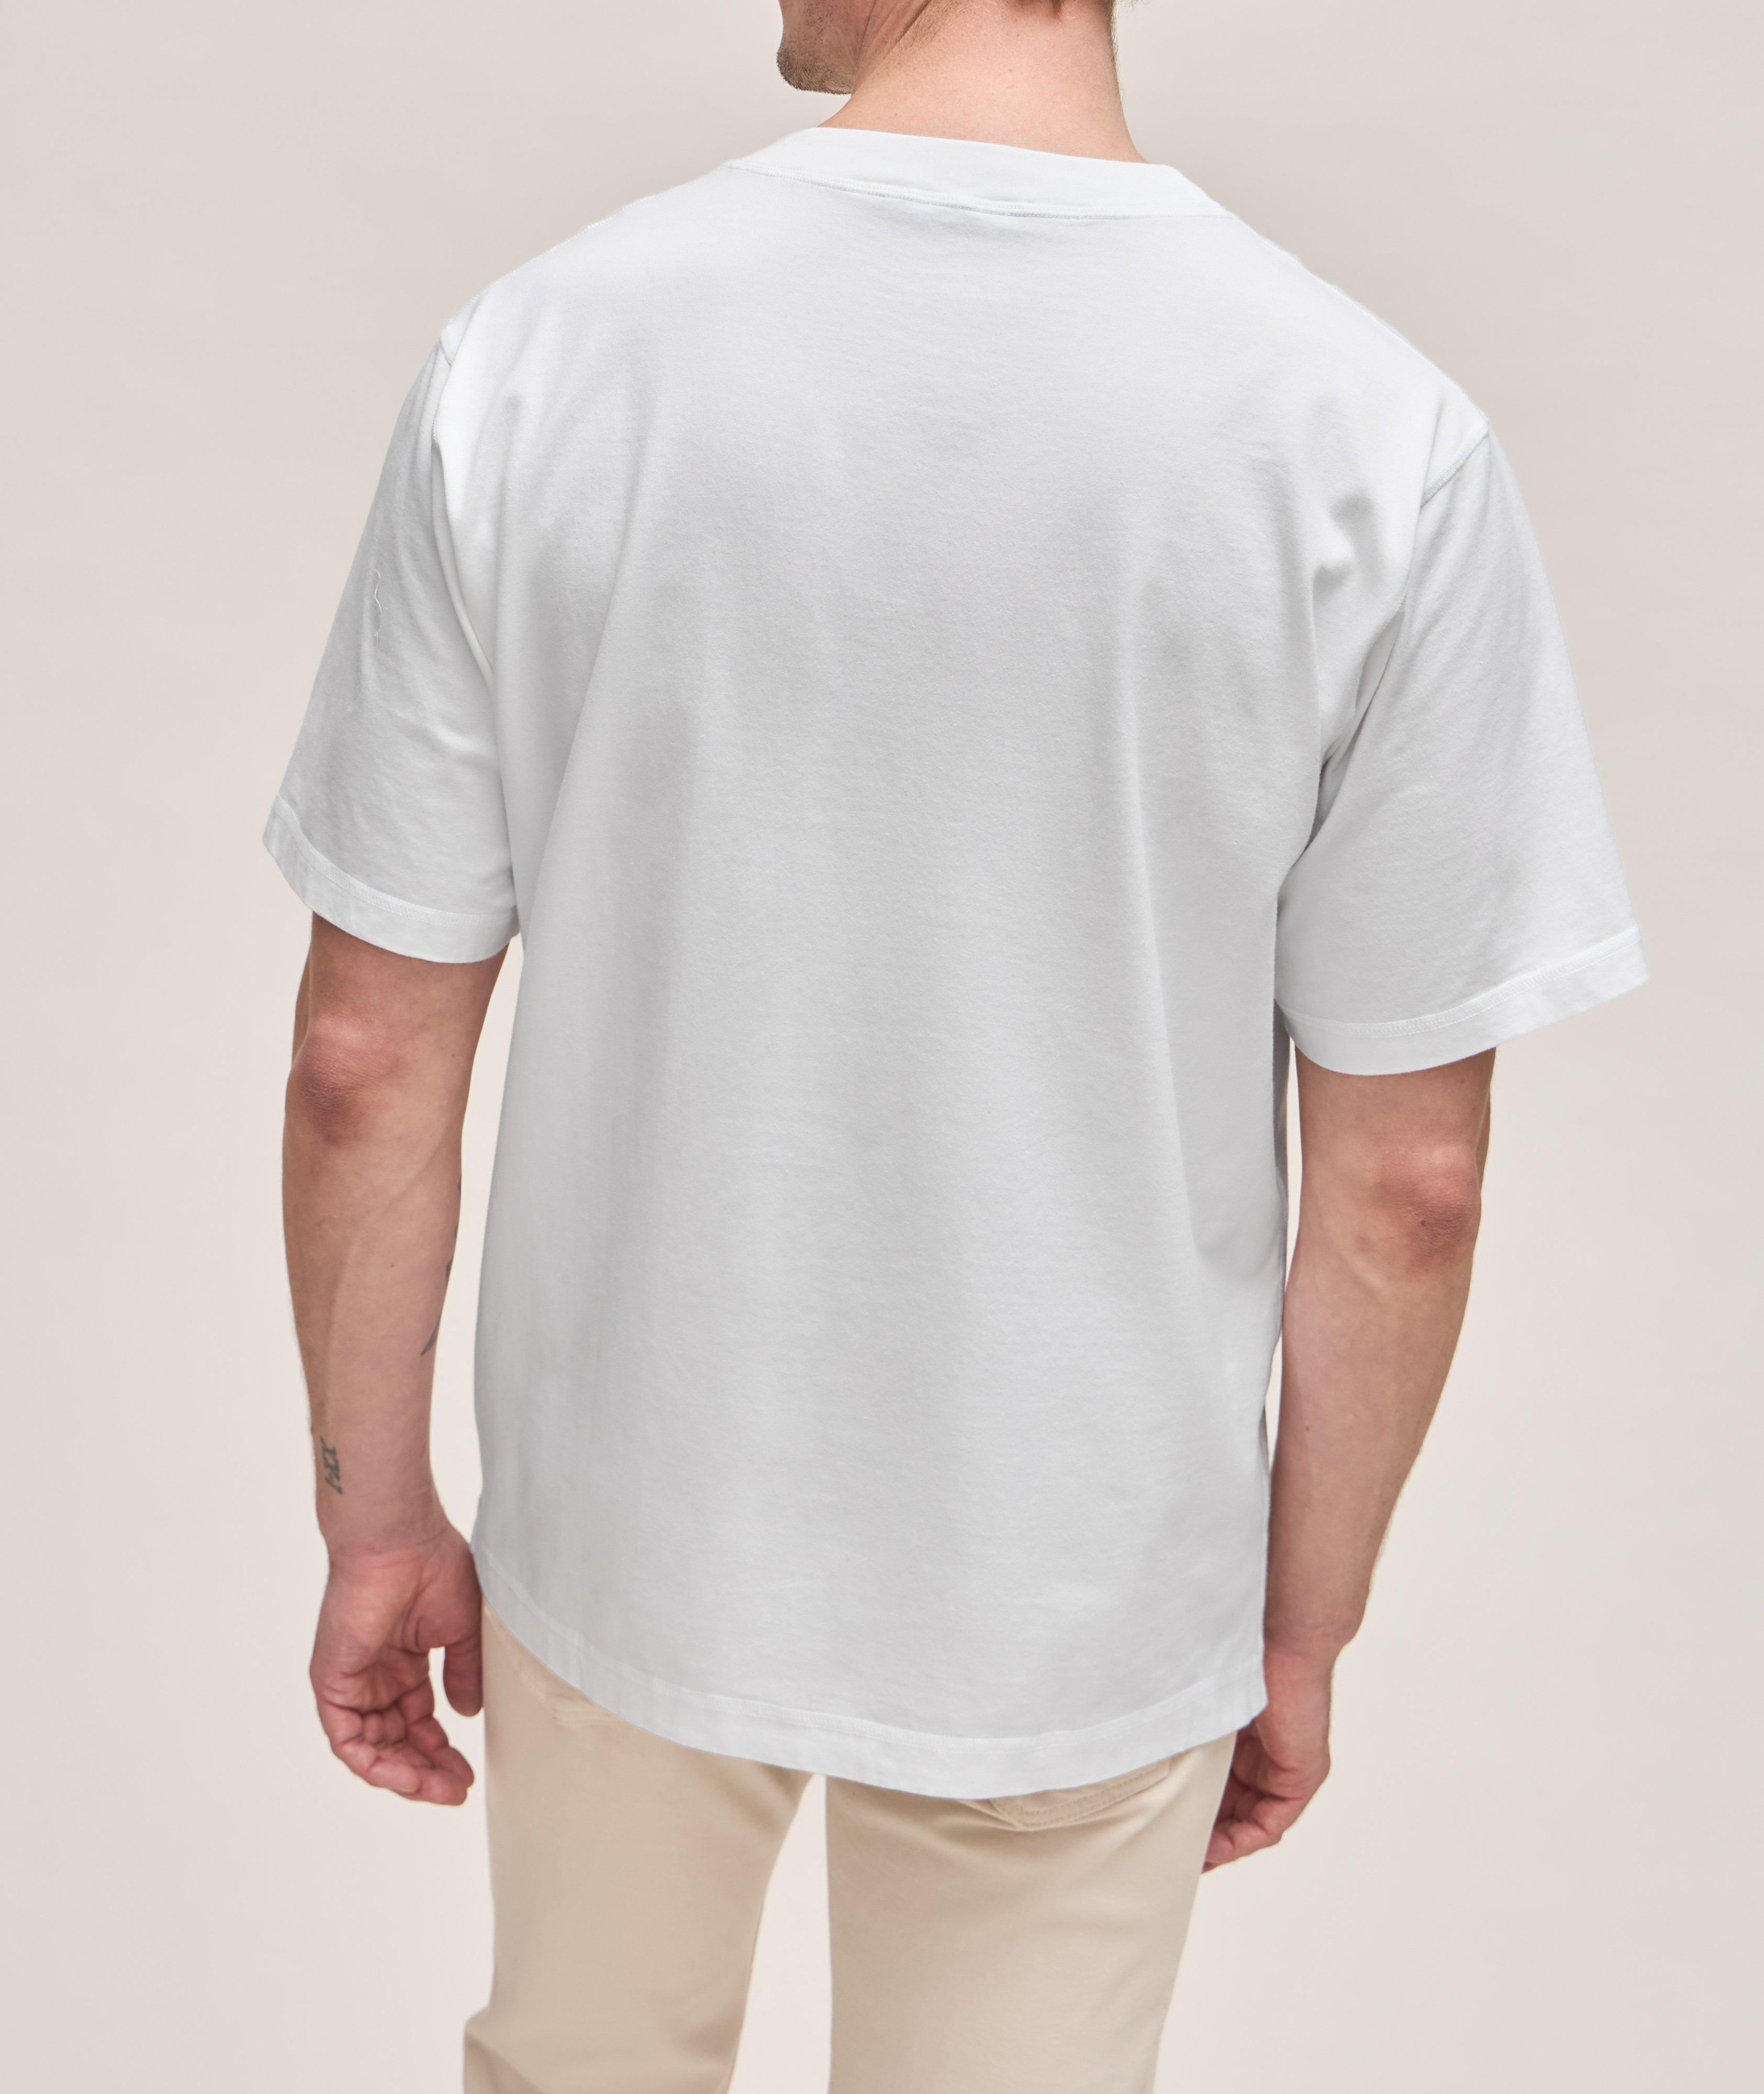 T-shirt en coton, collection Marina image 2